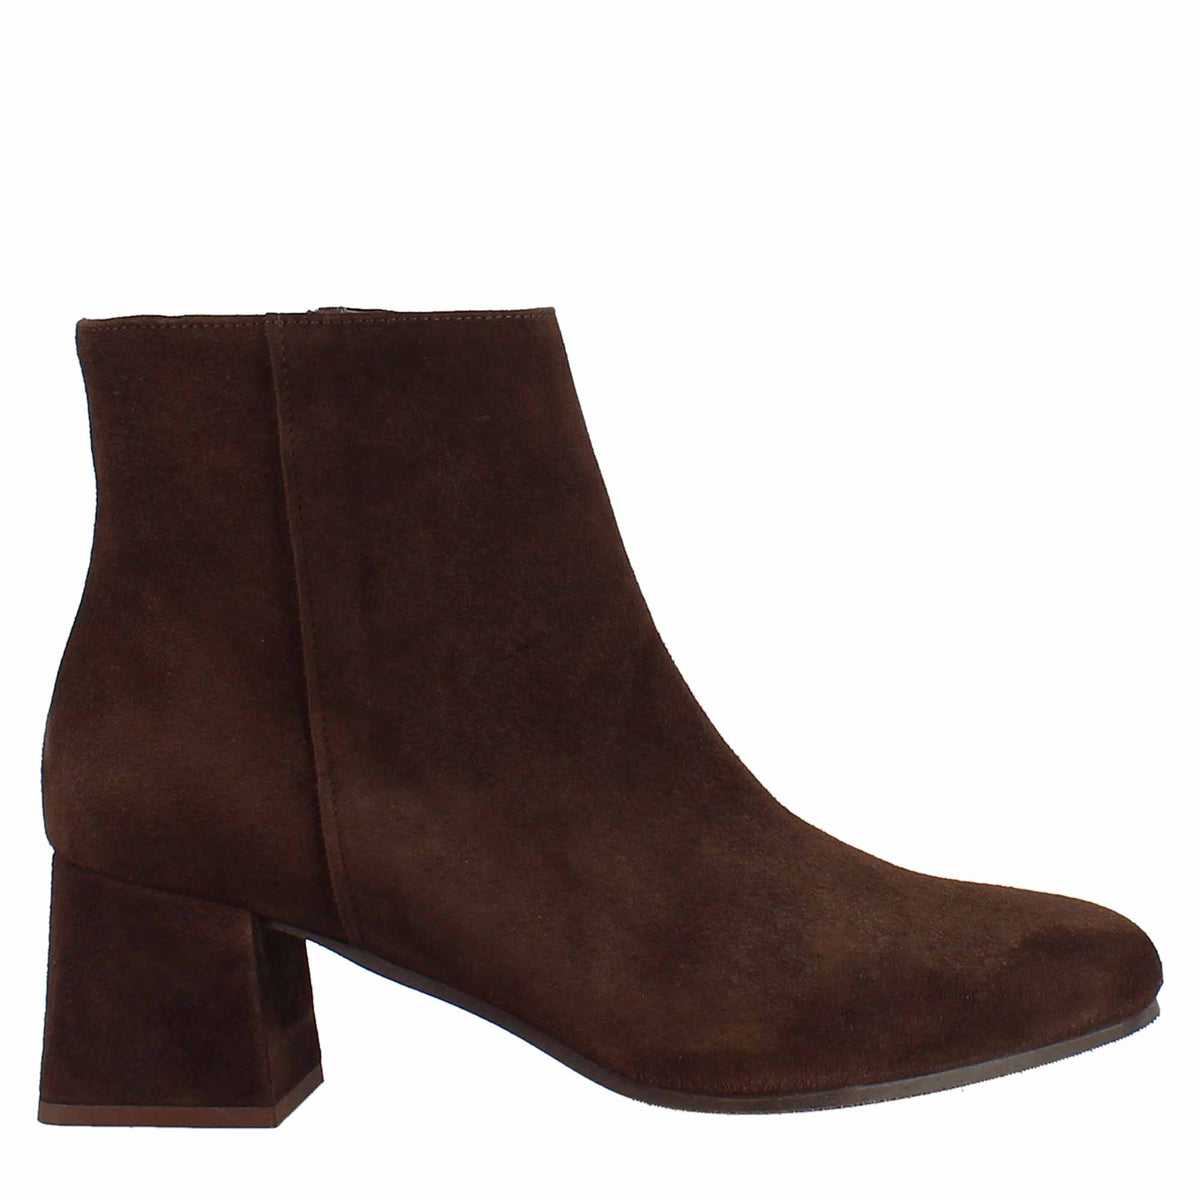 Handmade women's ankle boots in dark brown suede 